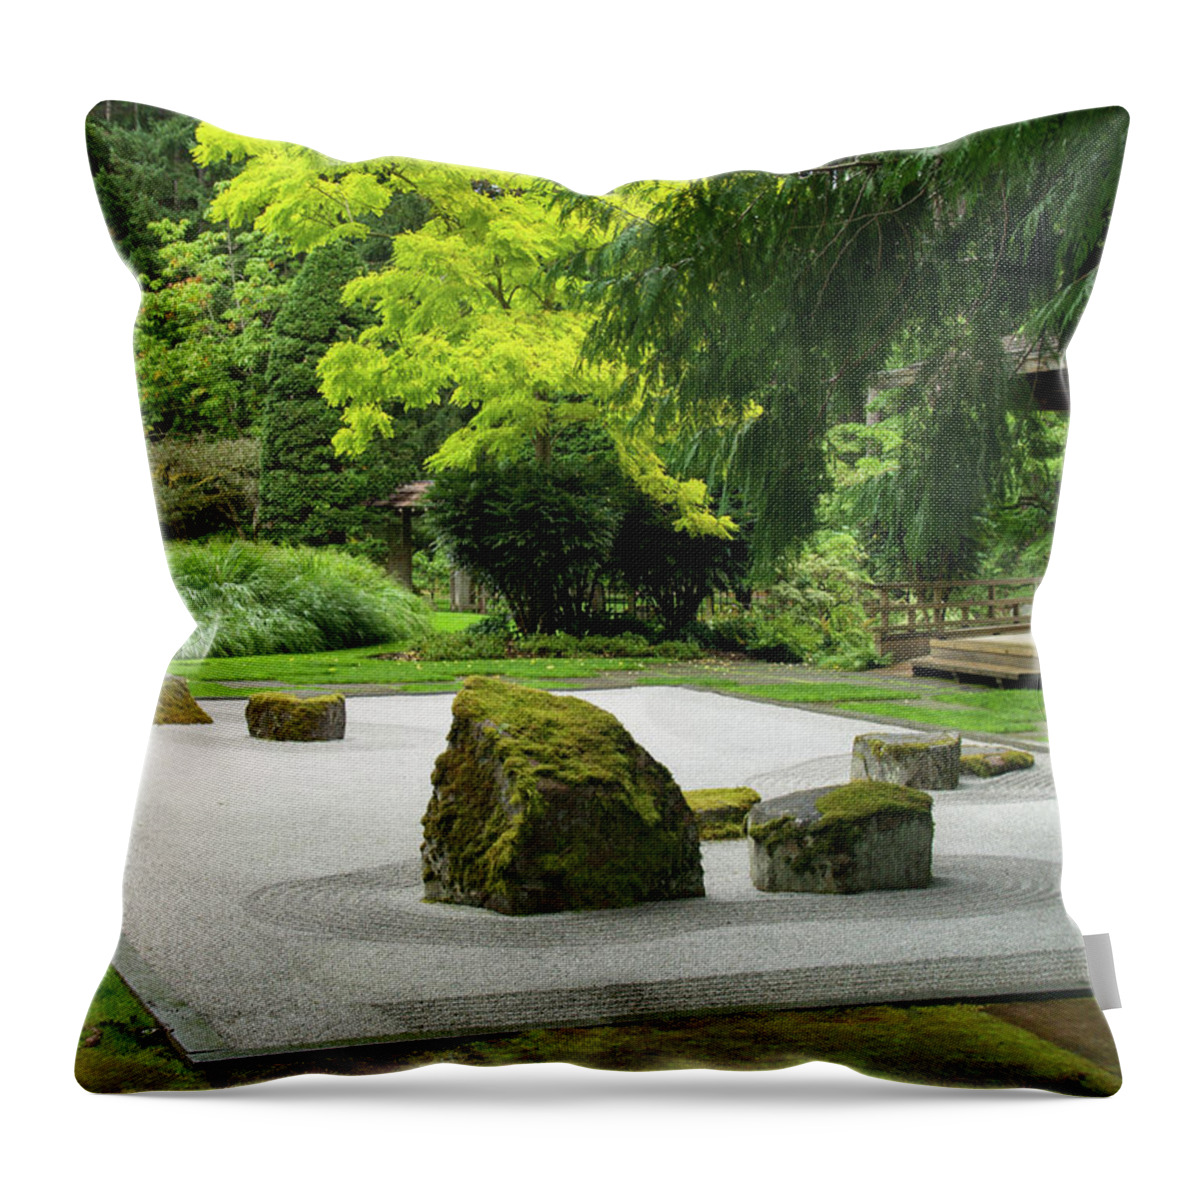 Seattle Throw Pillow featuring the photograph Zen Garden by Grey Coopre